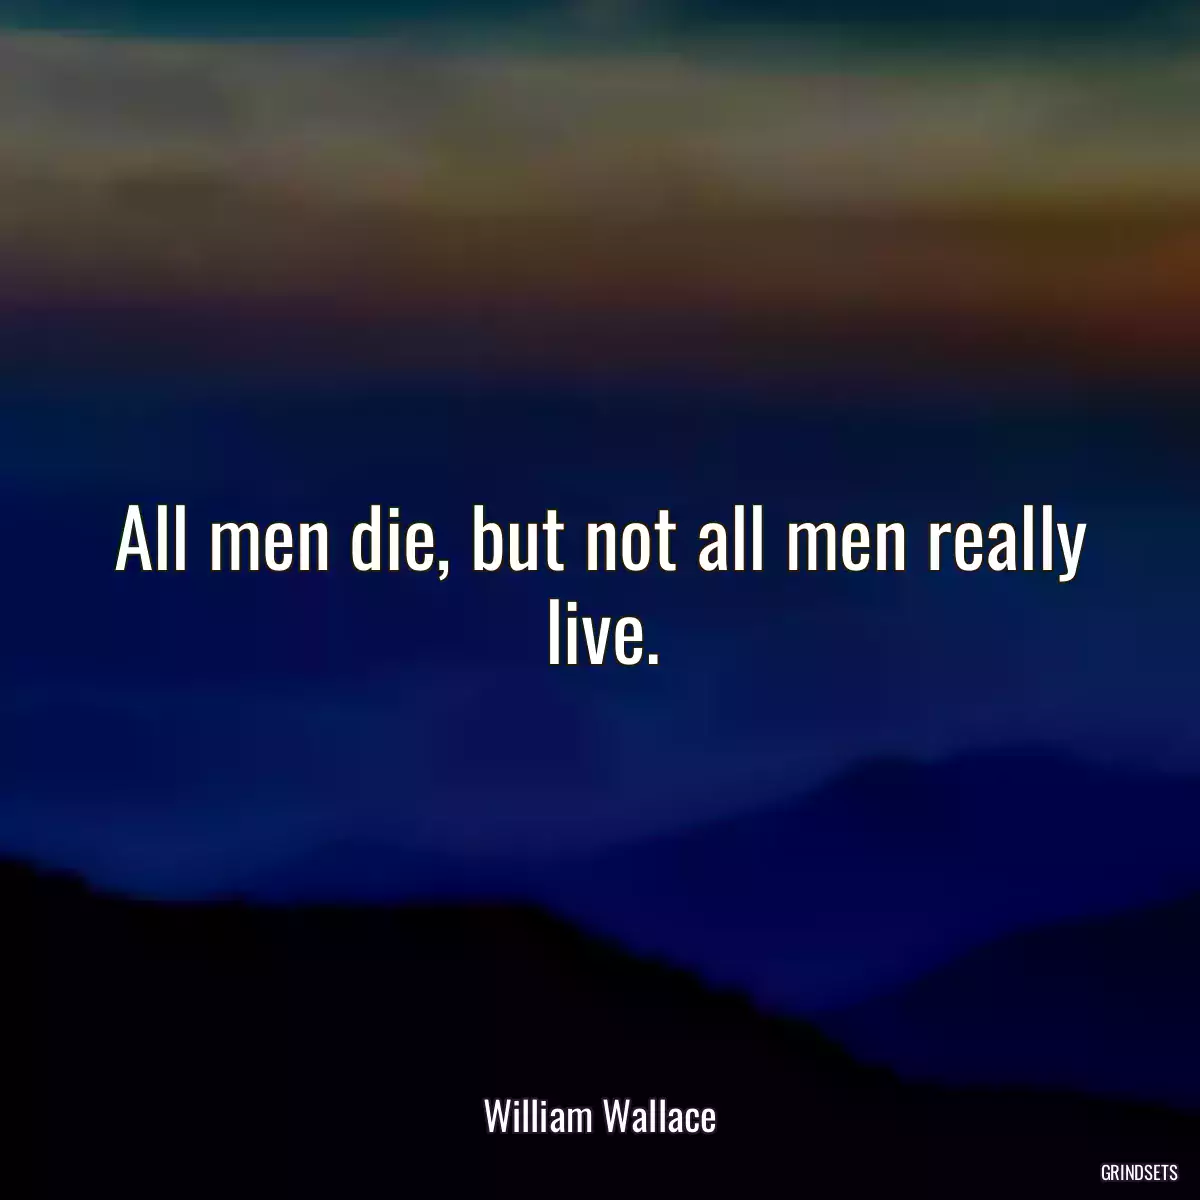 All men die, but not all men really live.